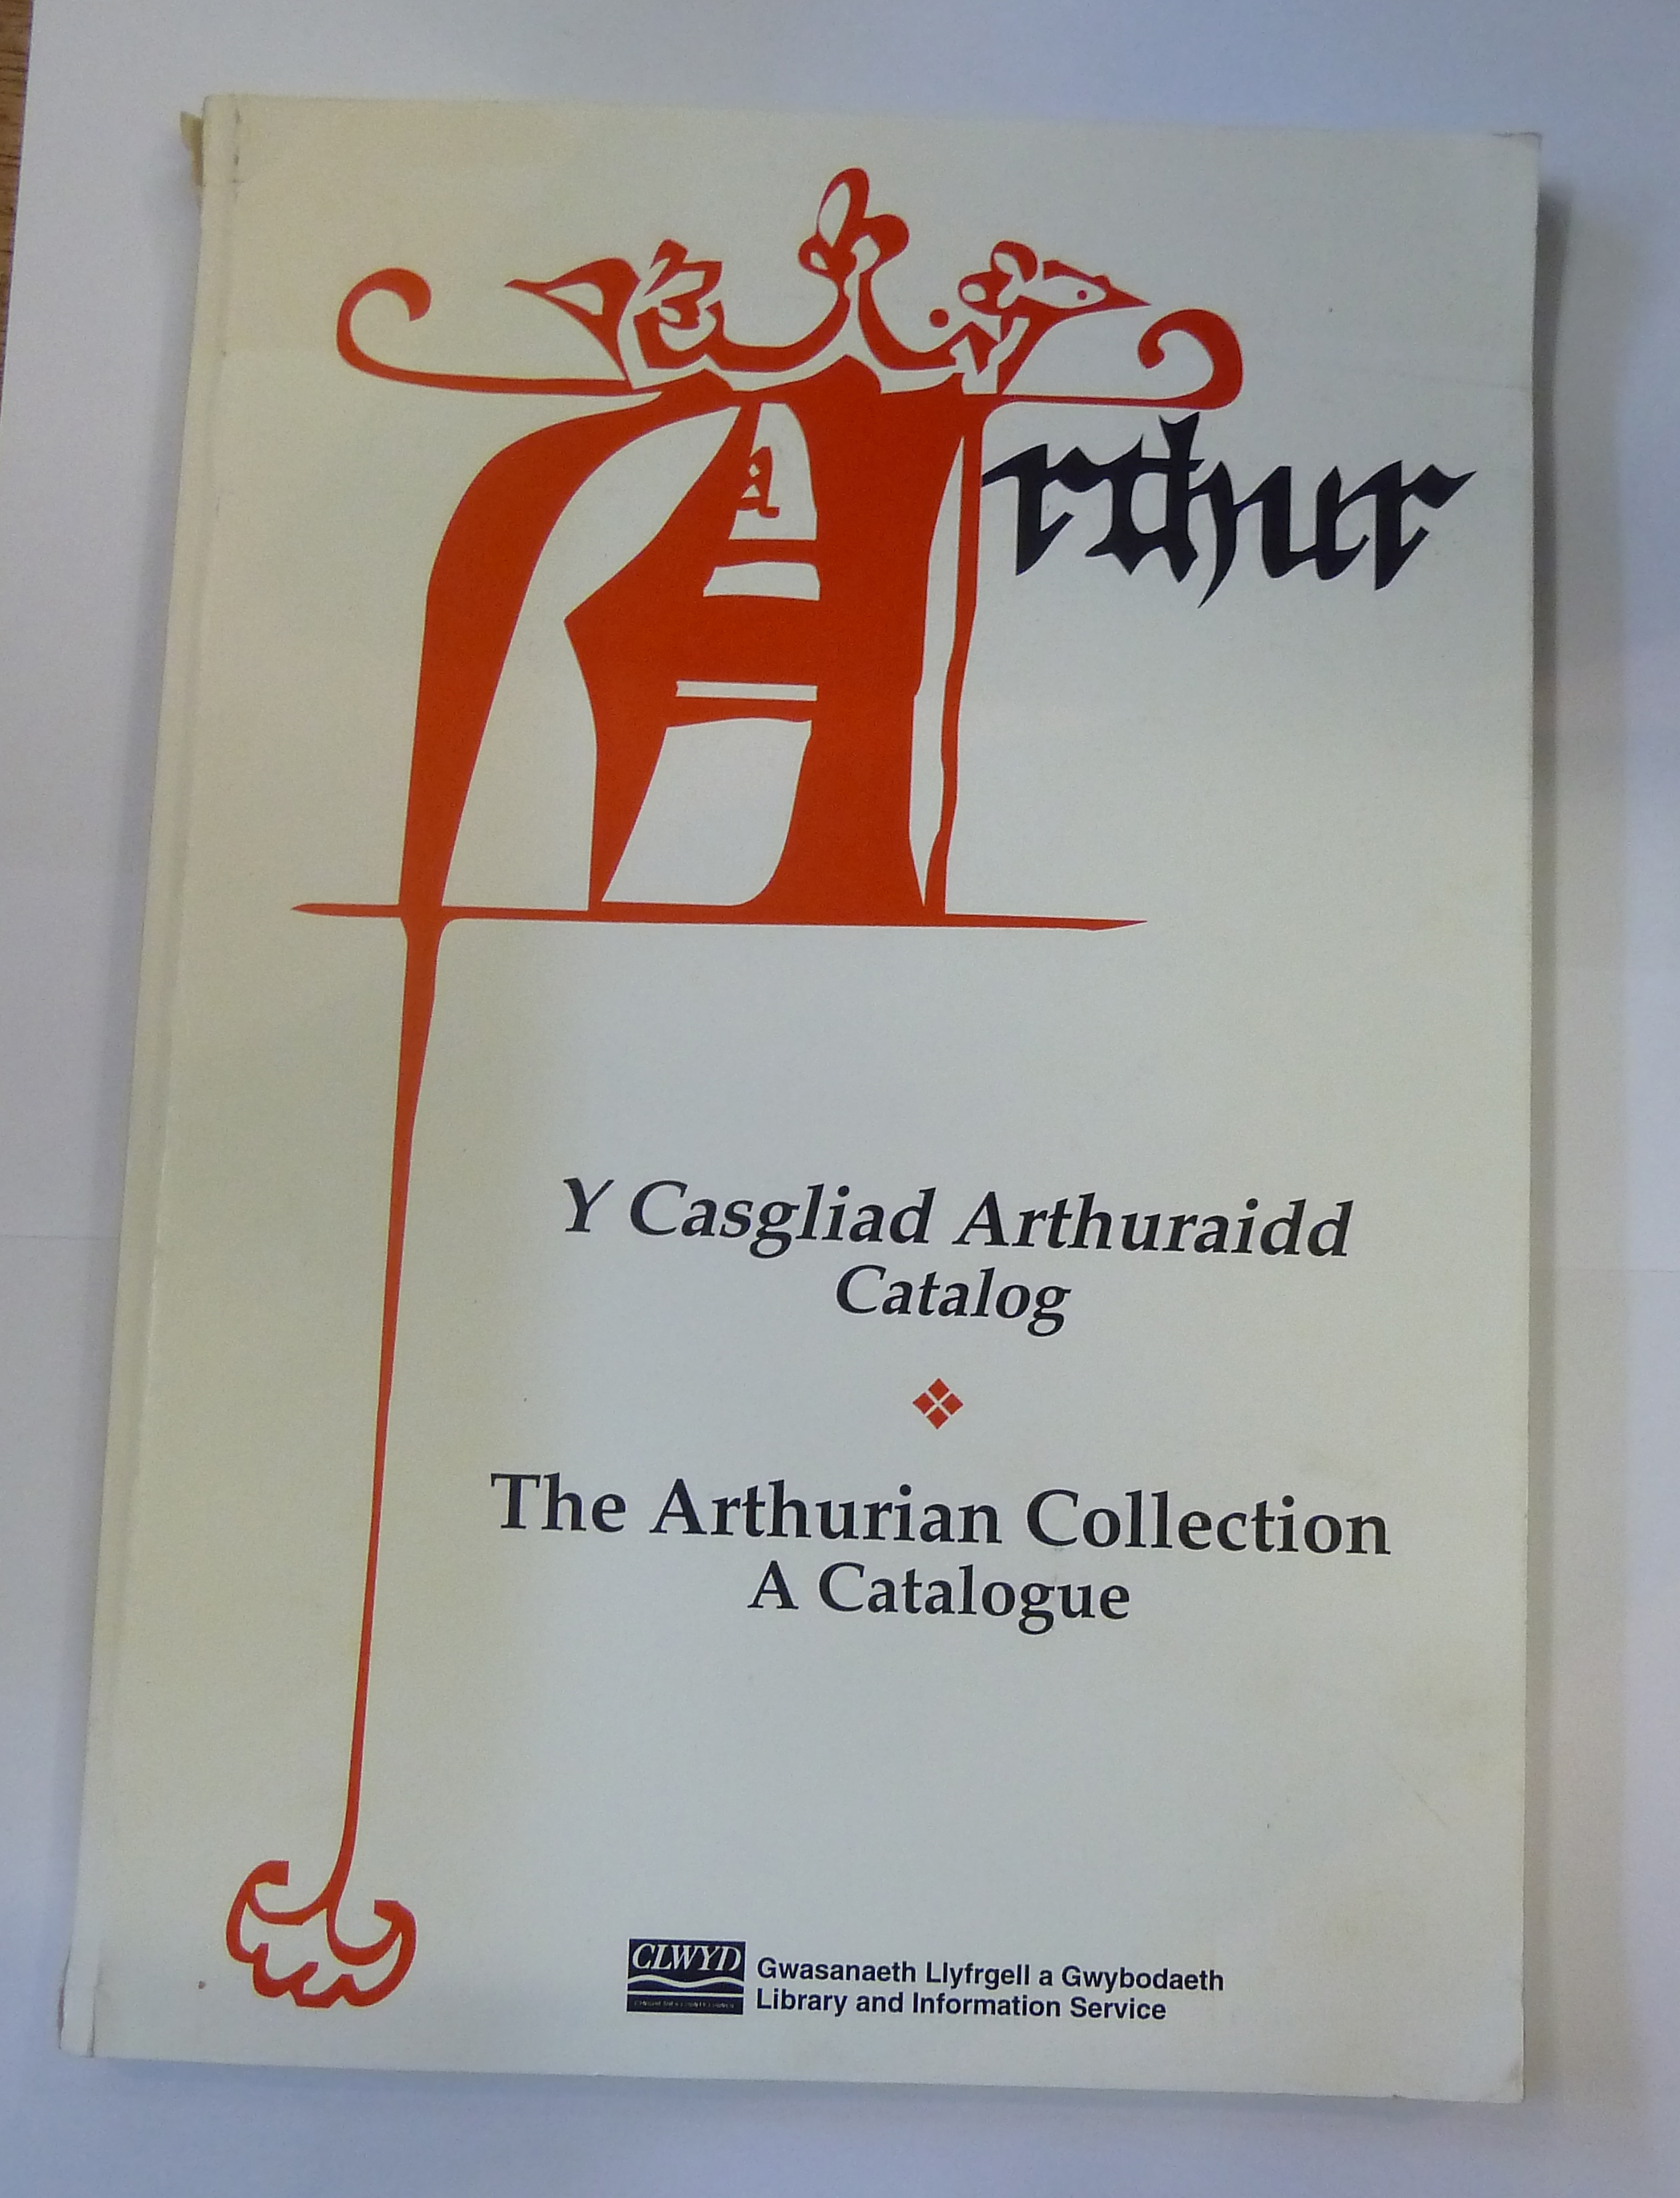  Y Casgliad Arthuraidd Catalog The Arthurian Collection A Catalogue